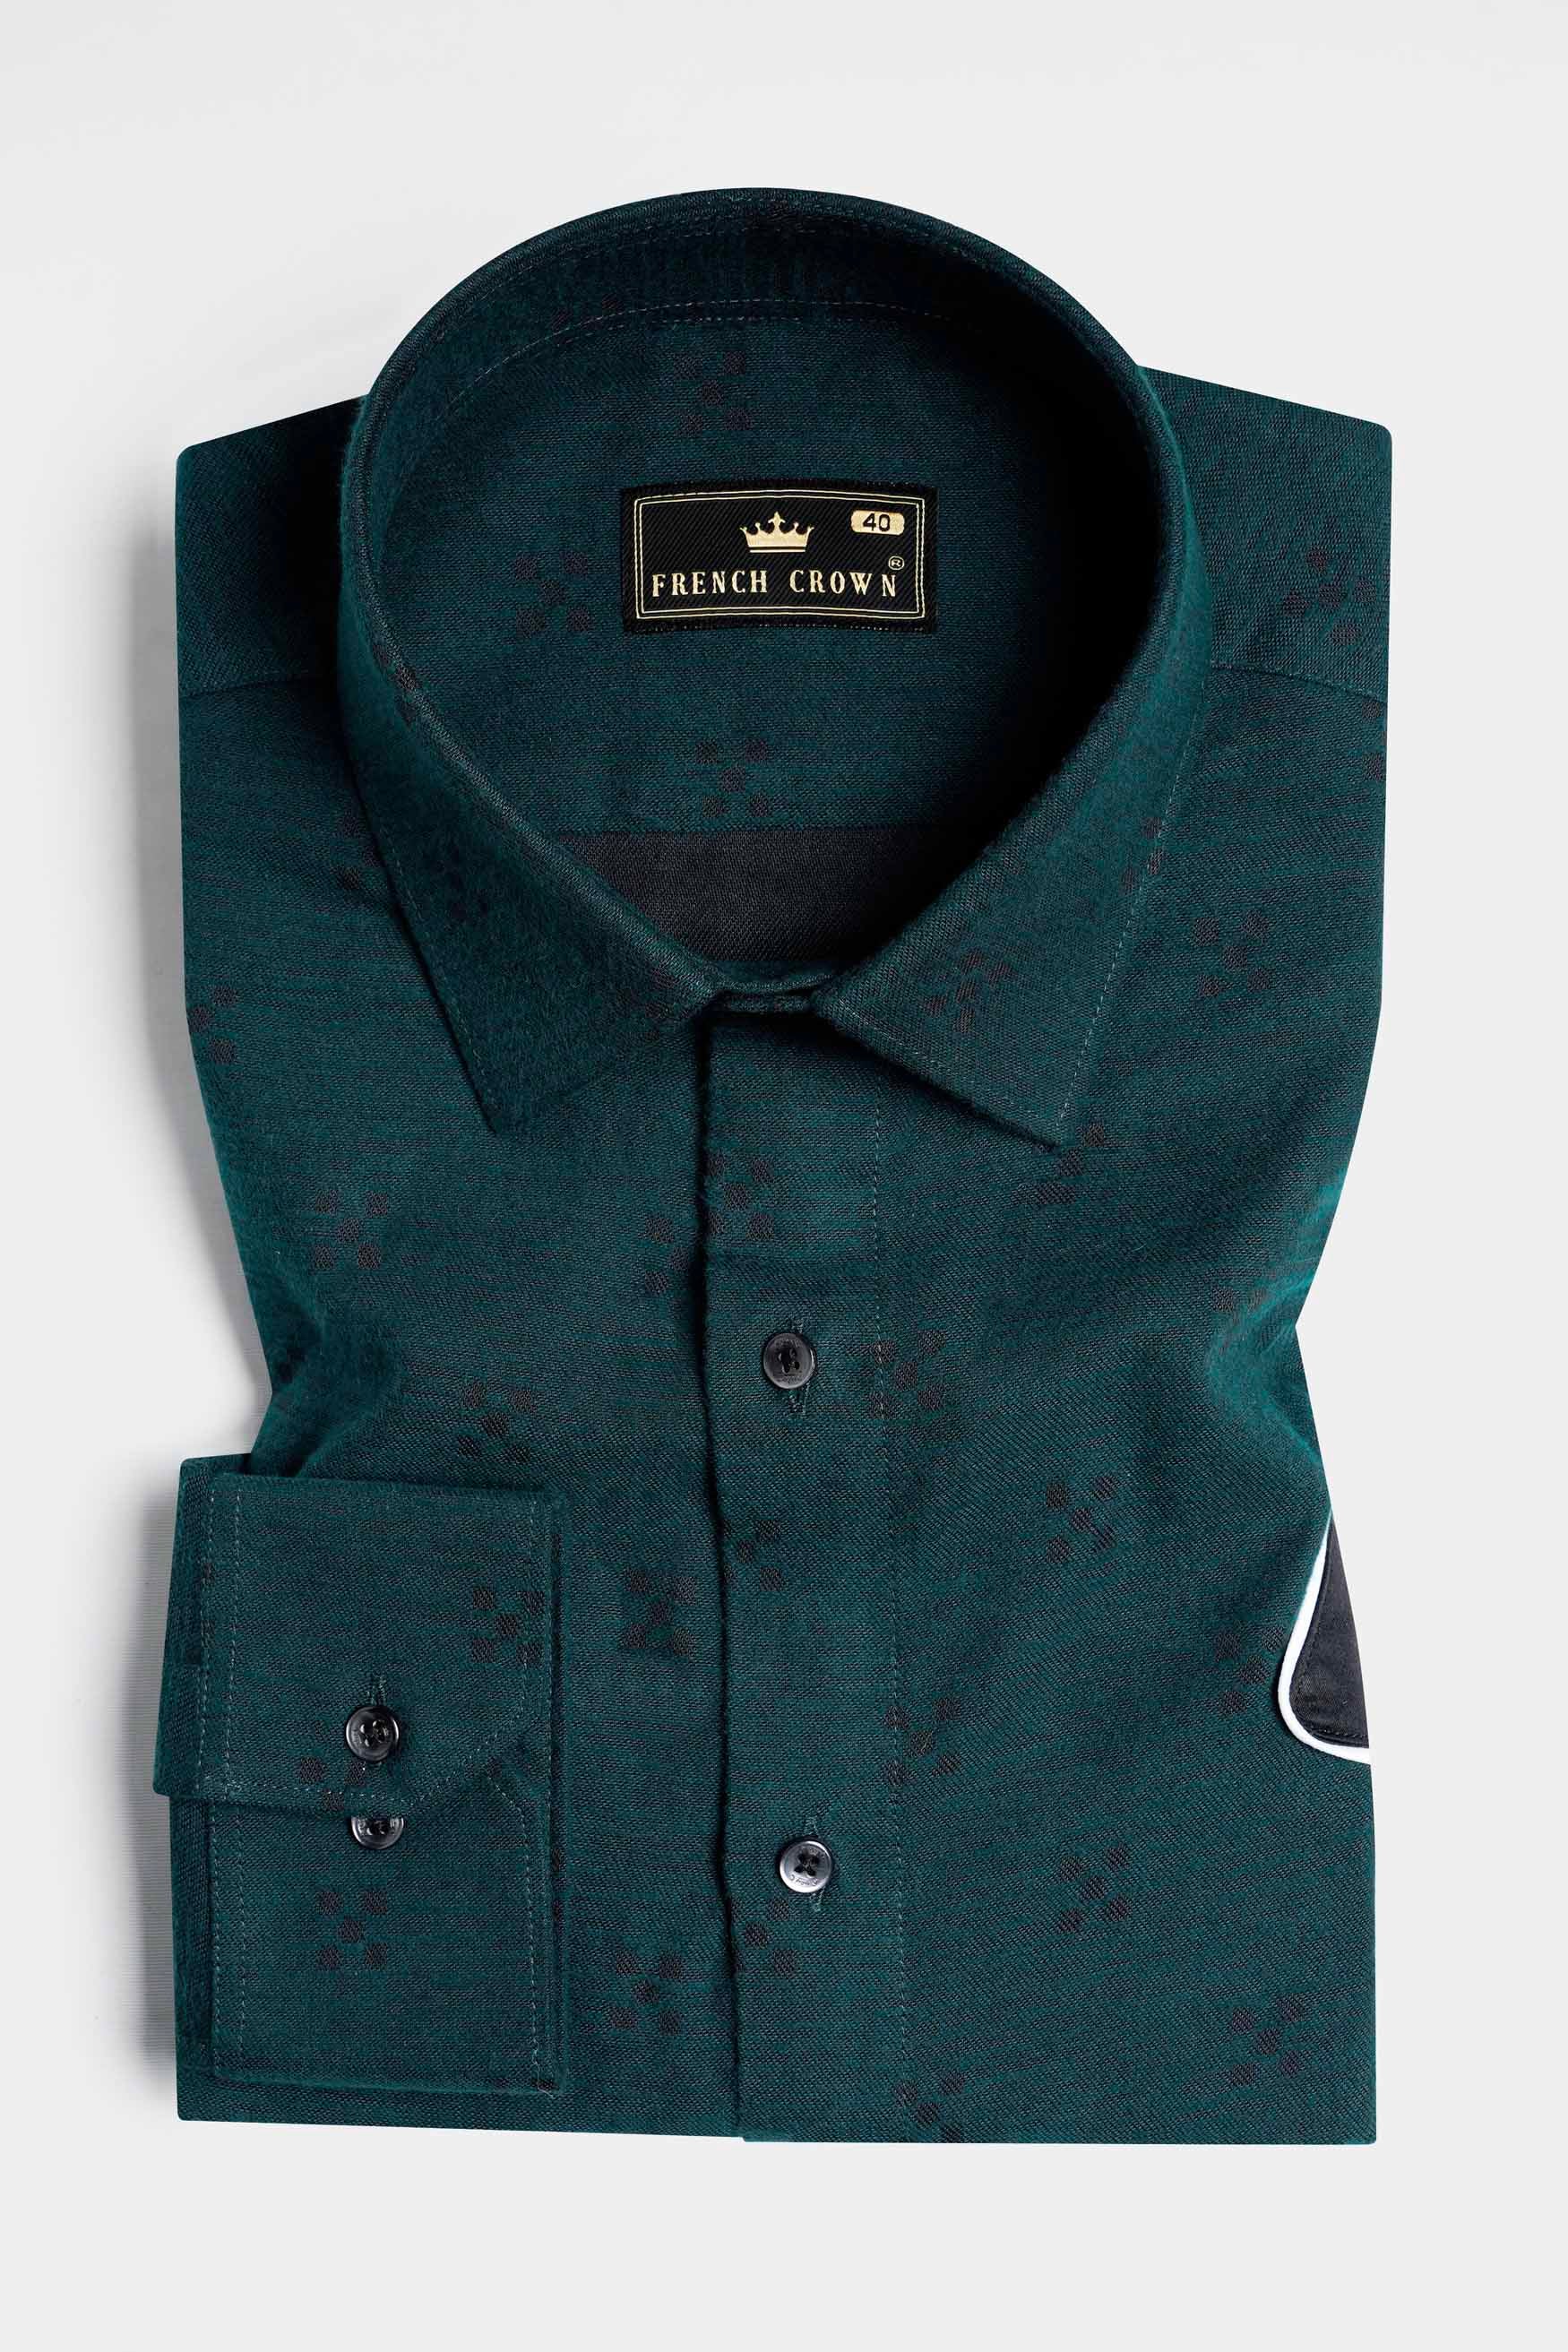 Timber Green and Black Face Like Pattern Dobby Textured Premium Giza Cotton Designer Shirt